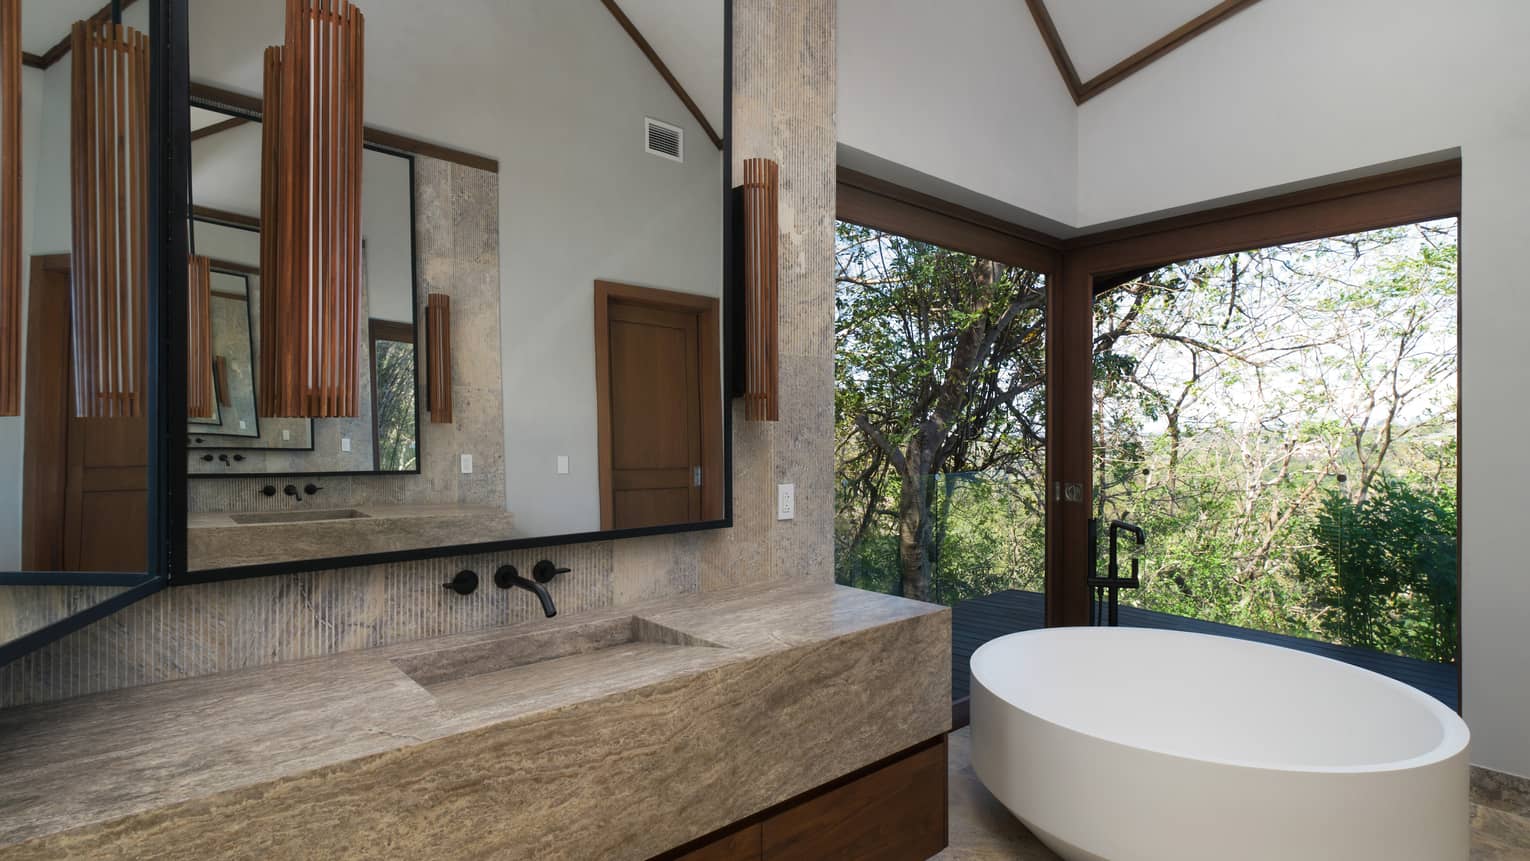 Modern bathroom with round standalone tub, windows with greenery